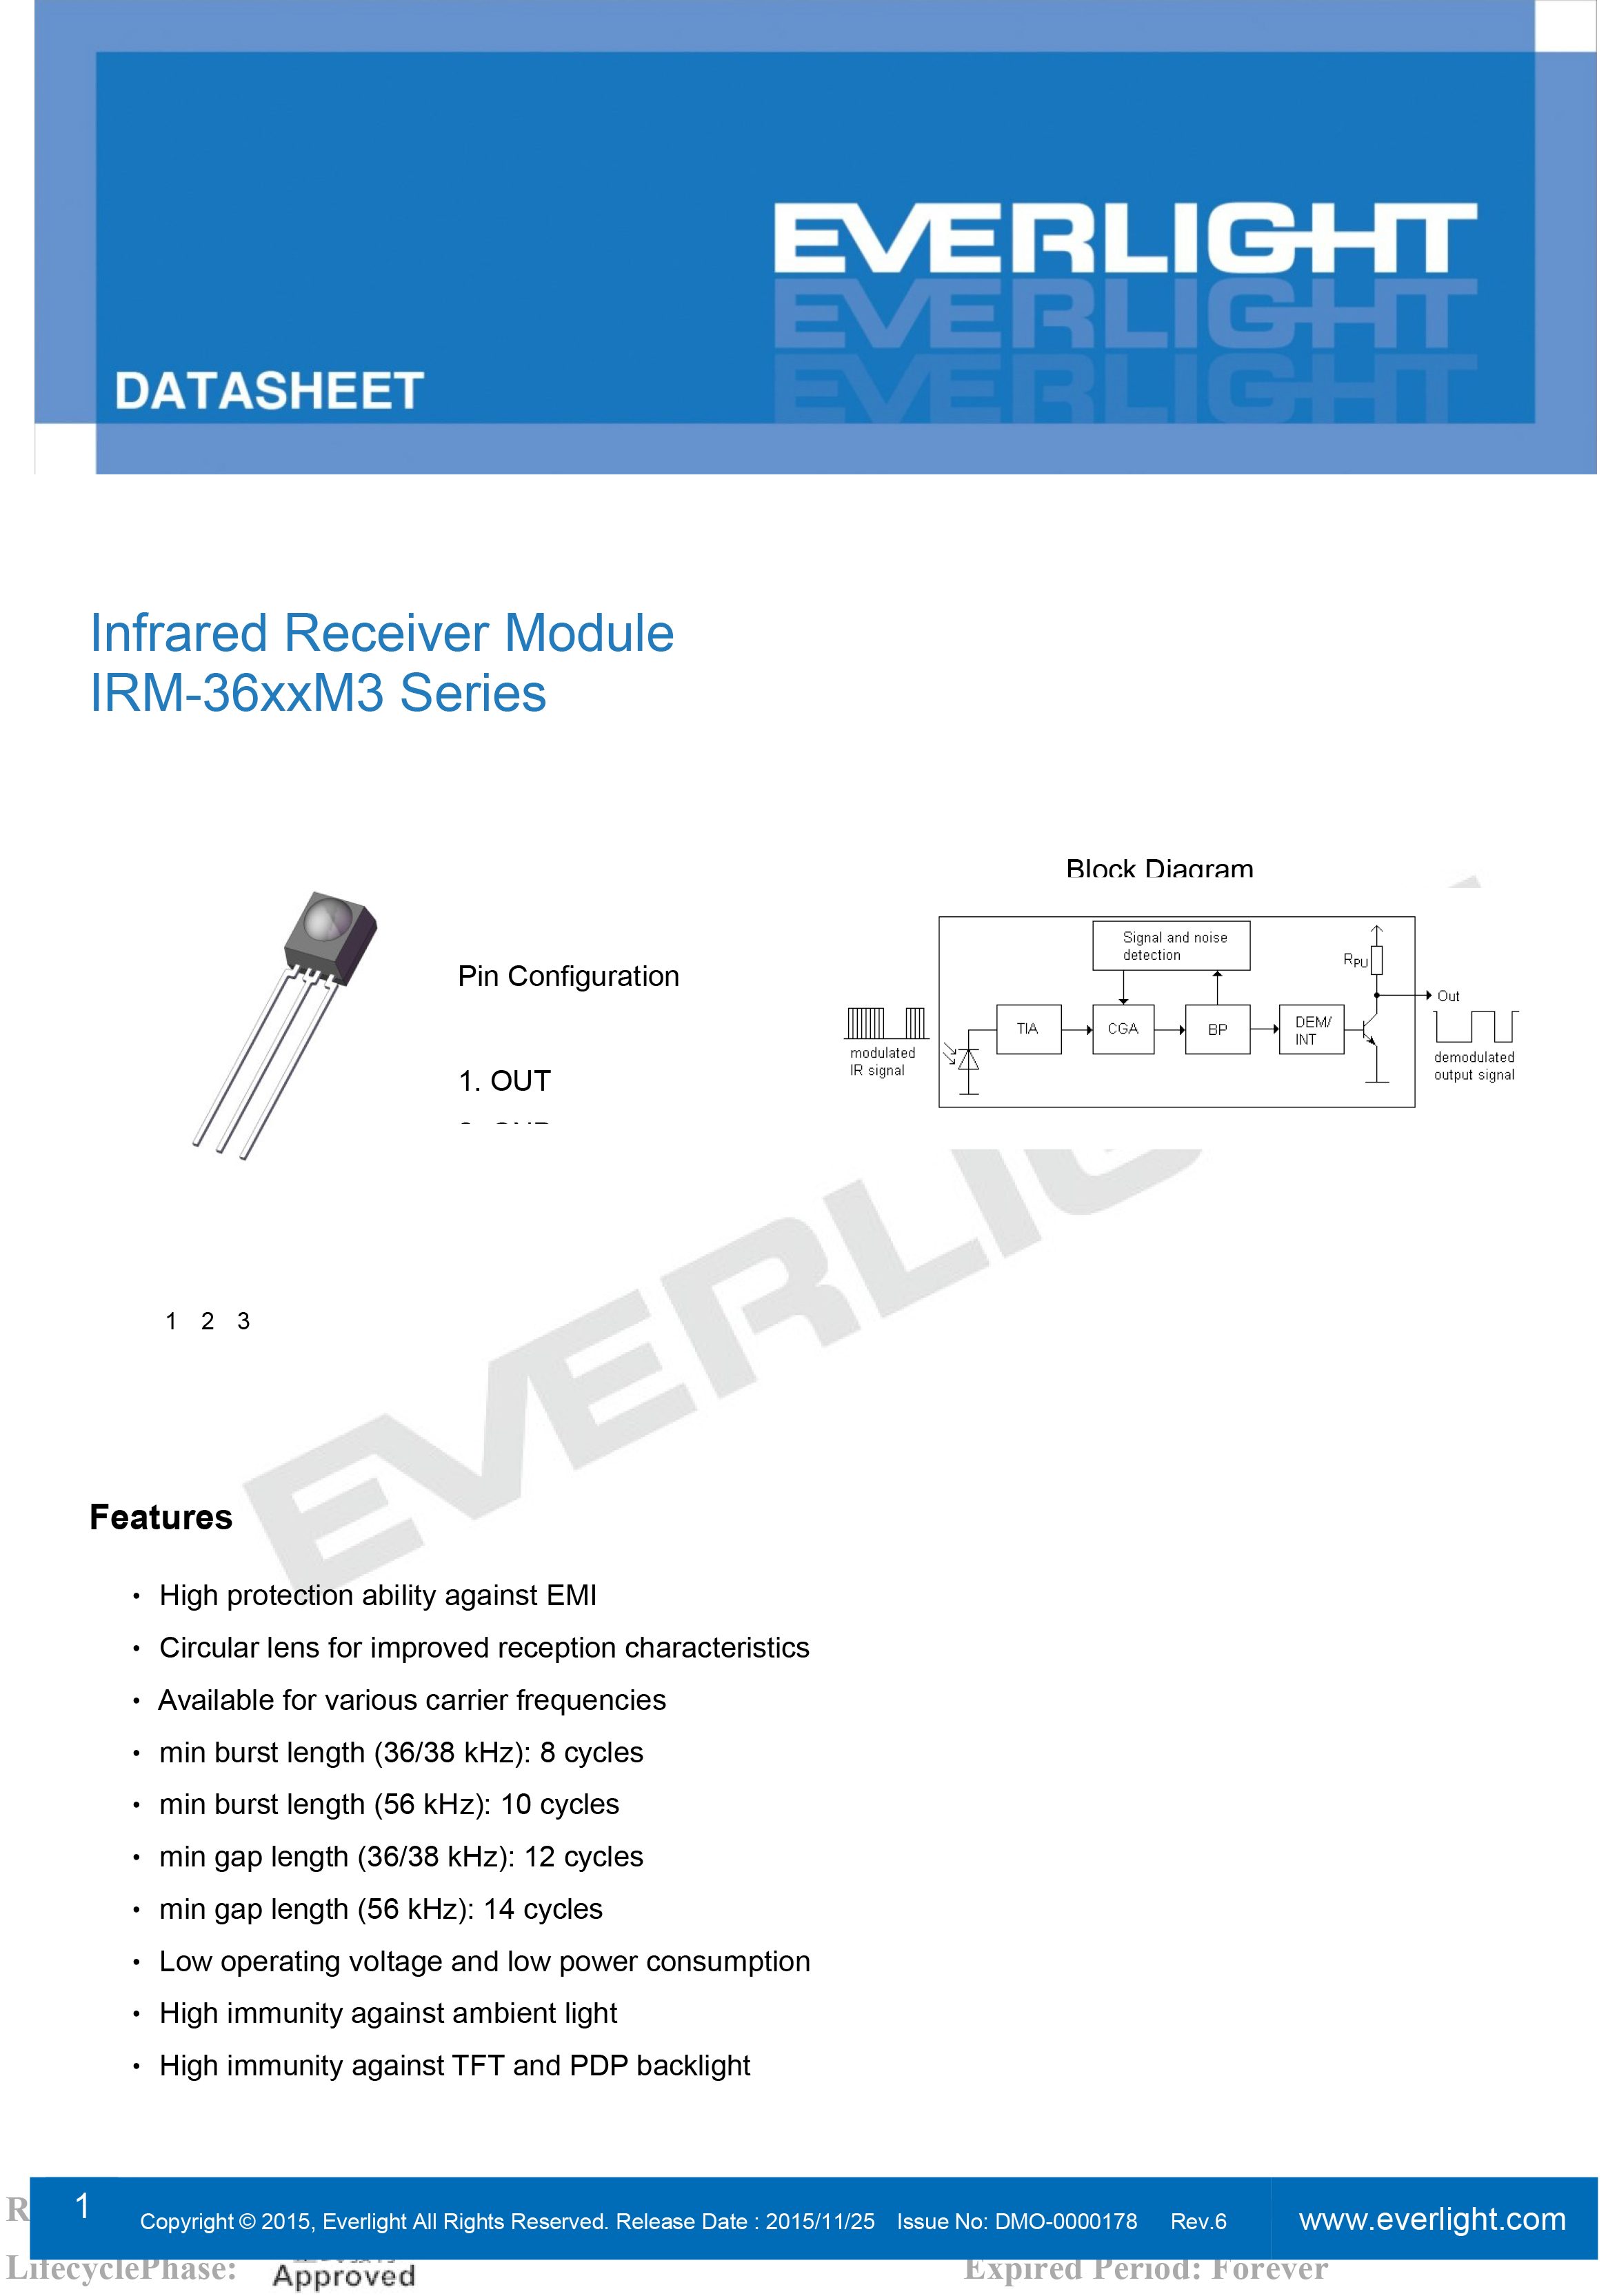 EVERLIGHT Infrared Receiver Module IRM-3656M3 Datasheet